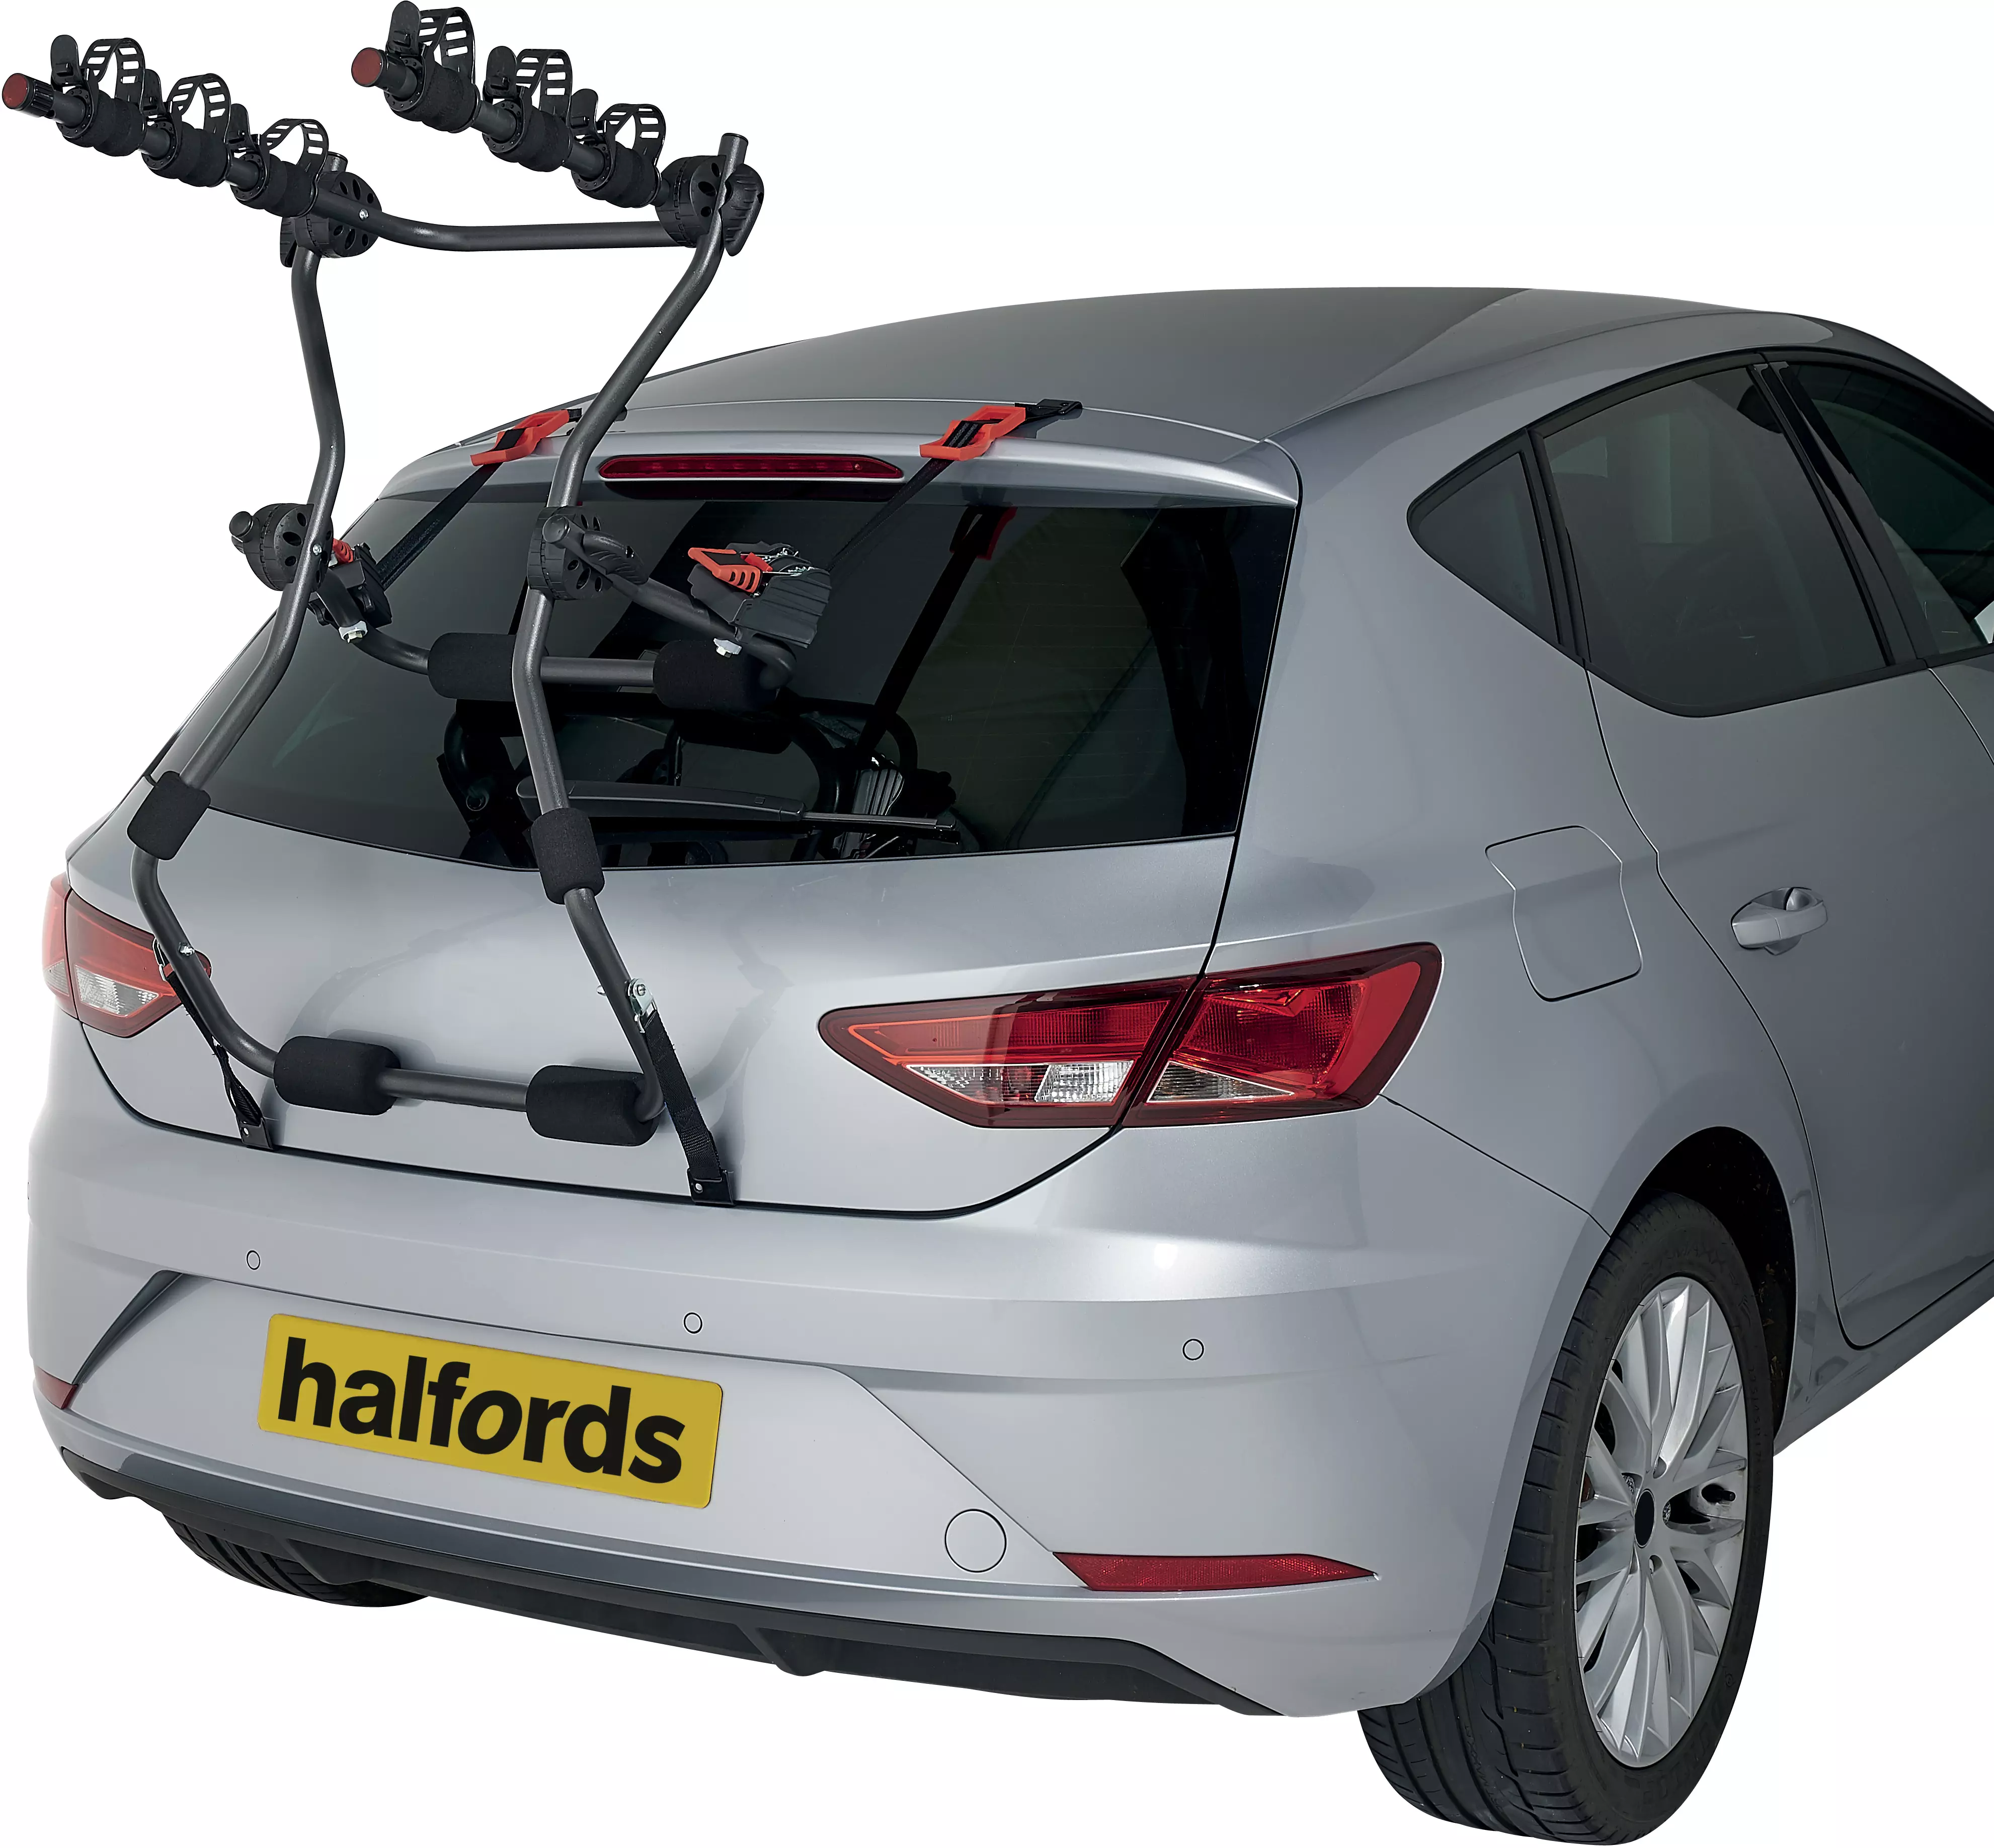 halfords car bike rack